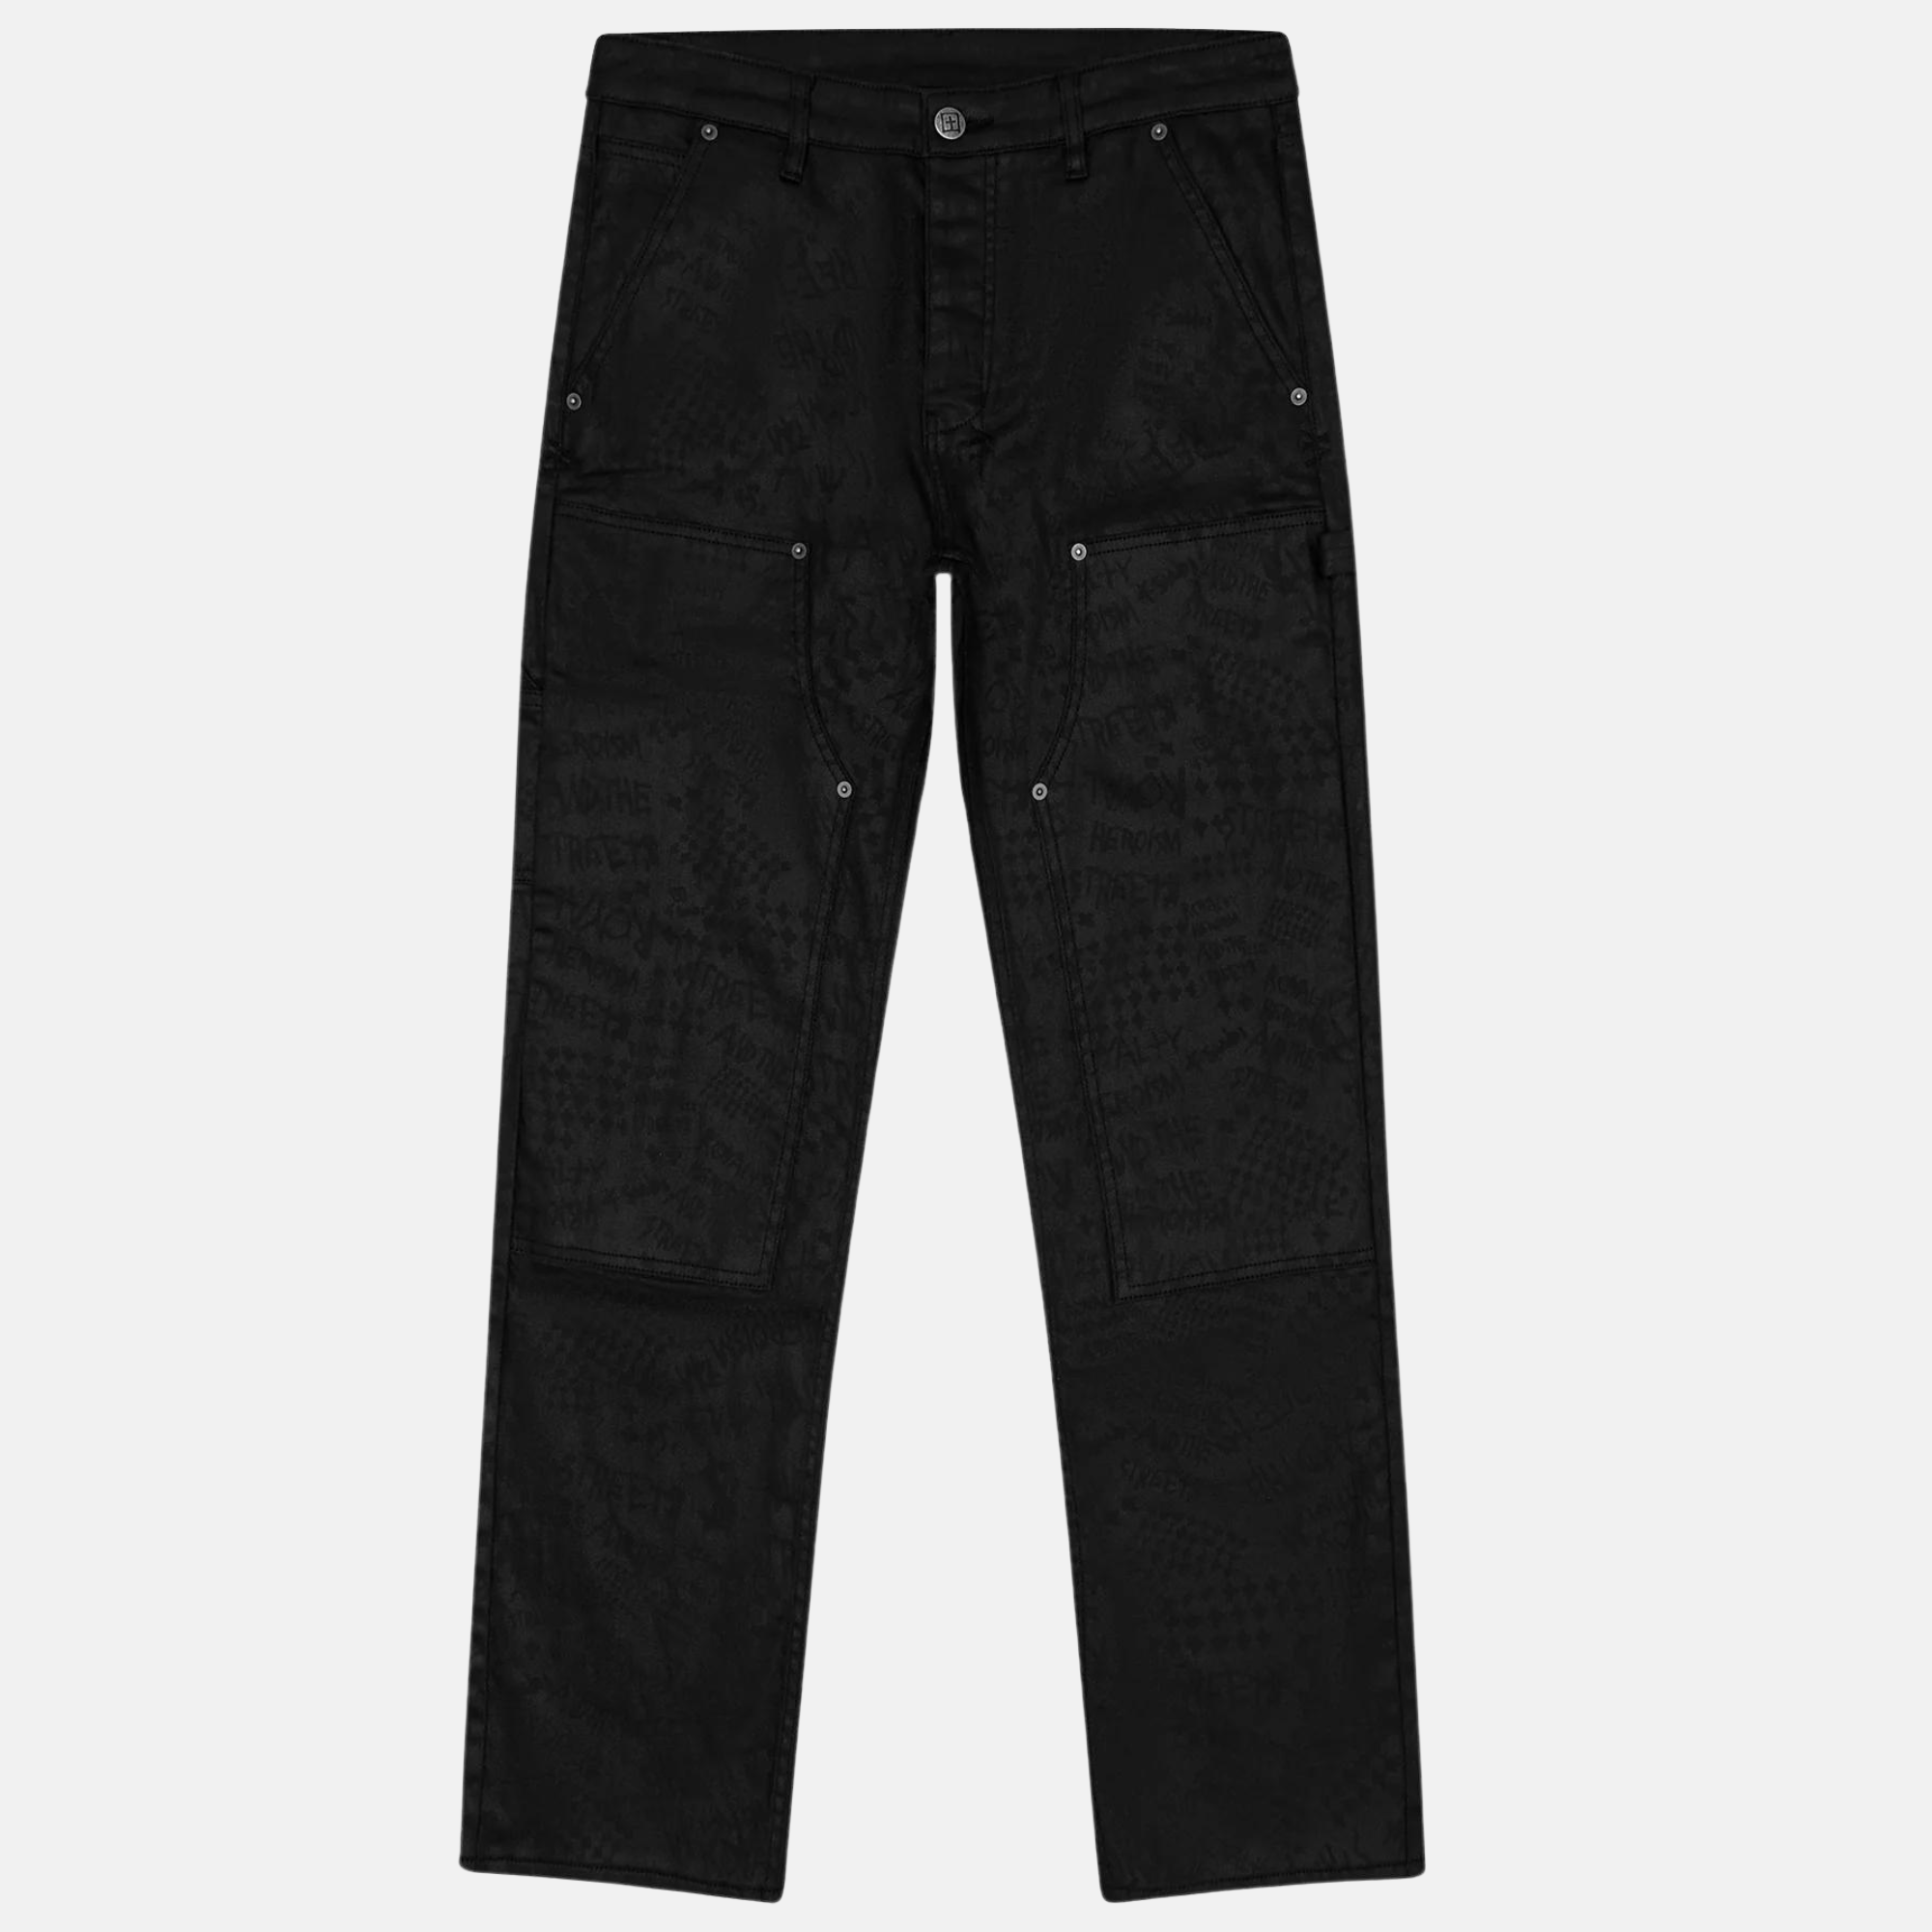 Ksubi Operator Pant Black Grease Jeans